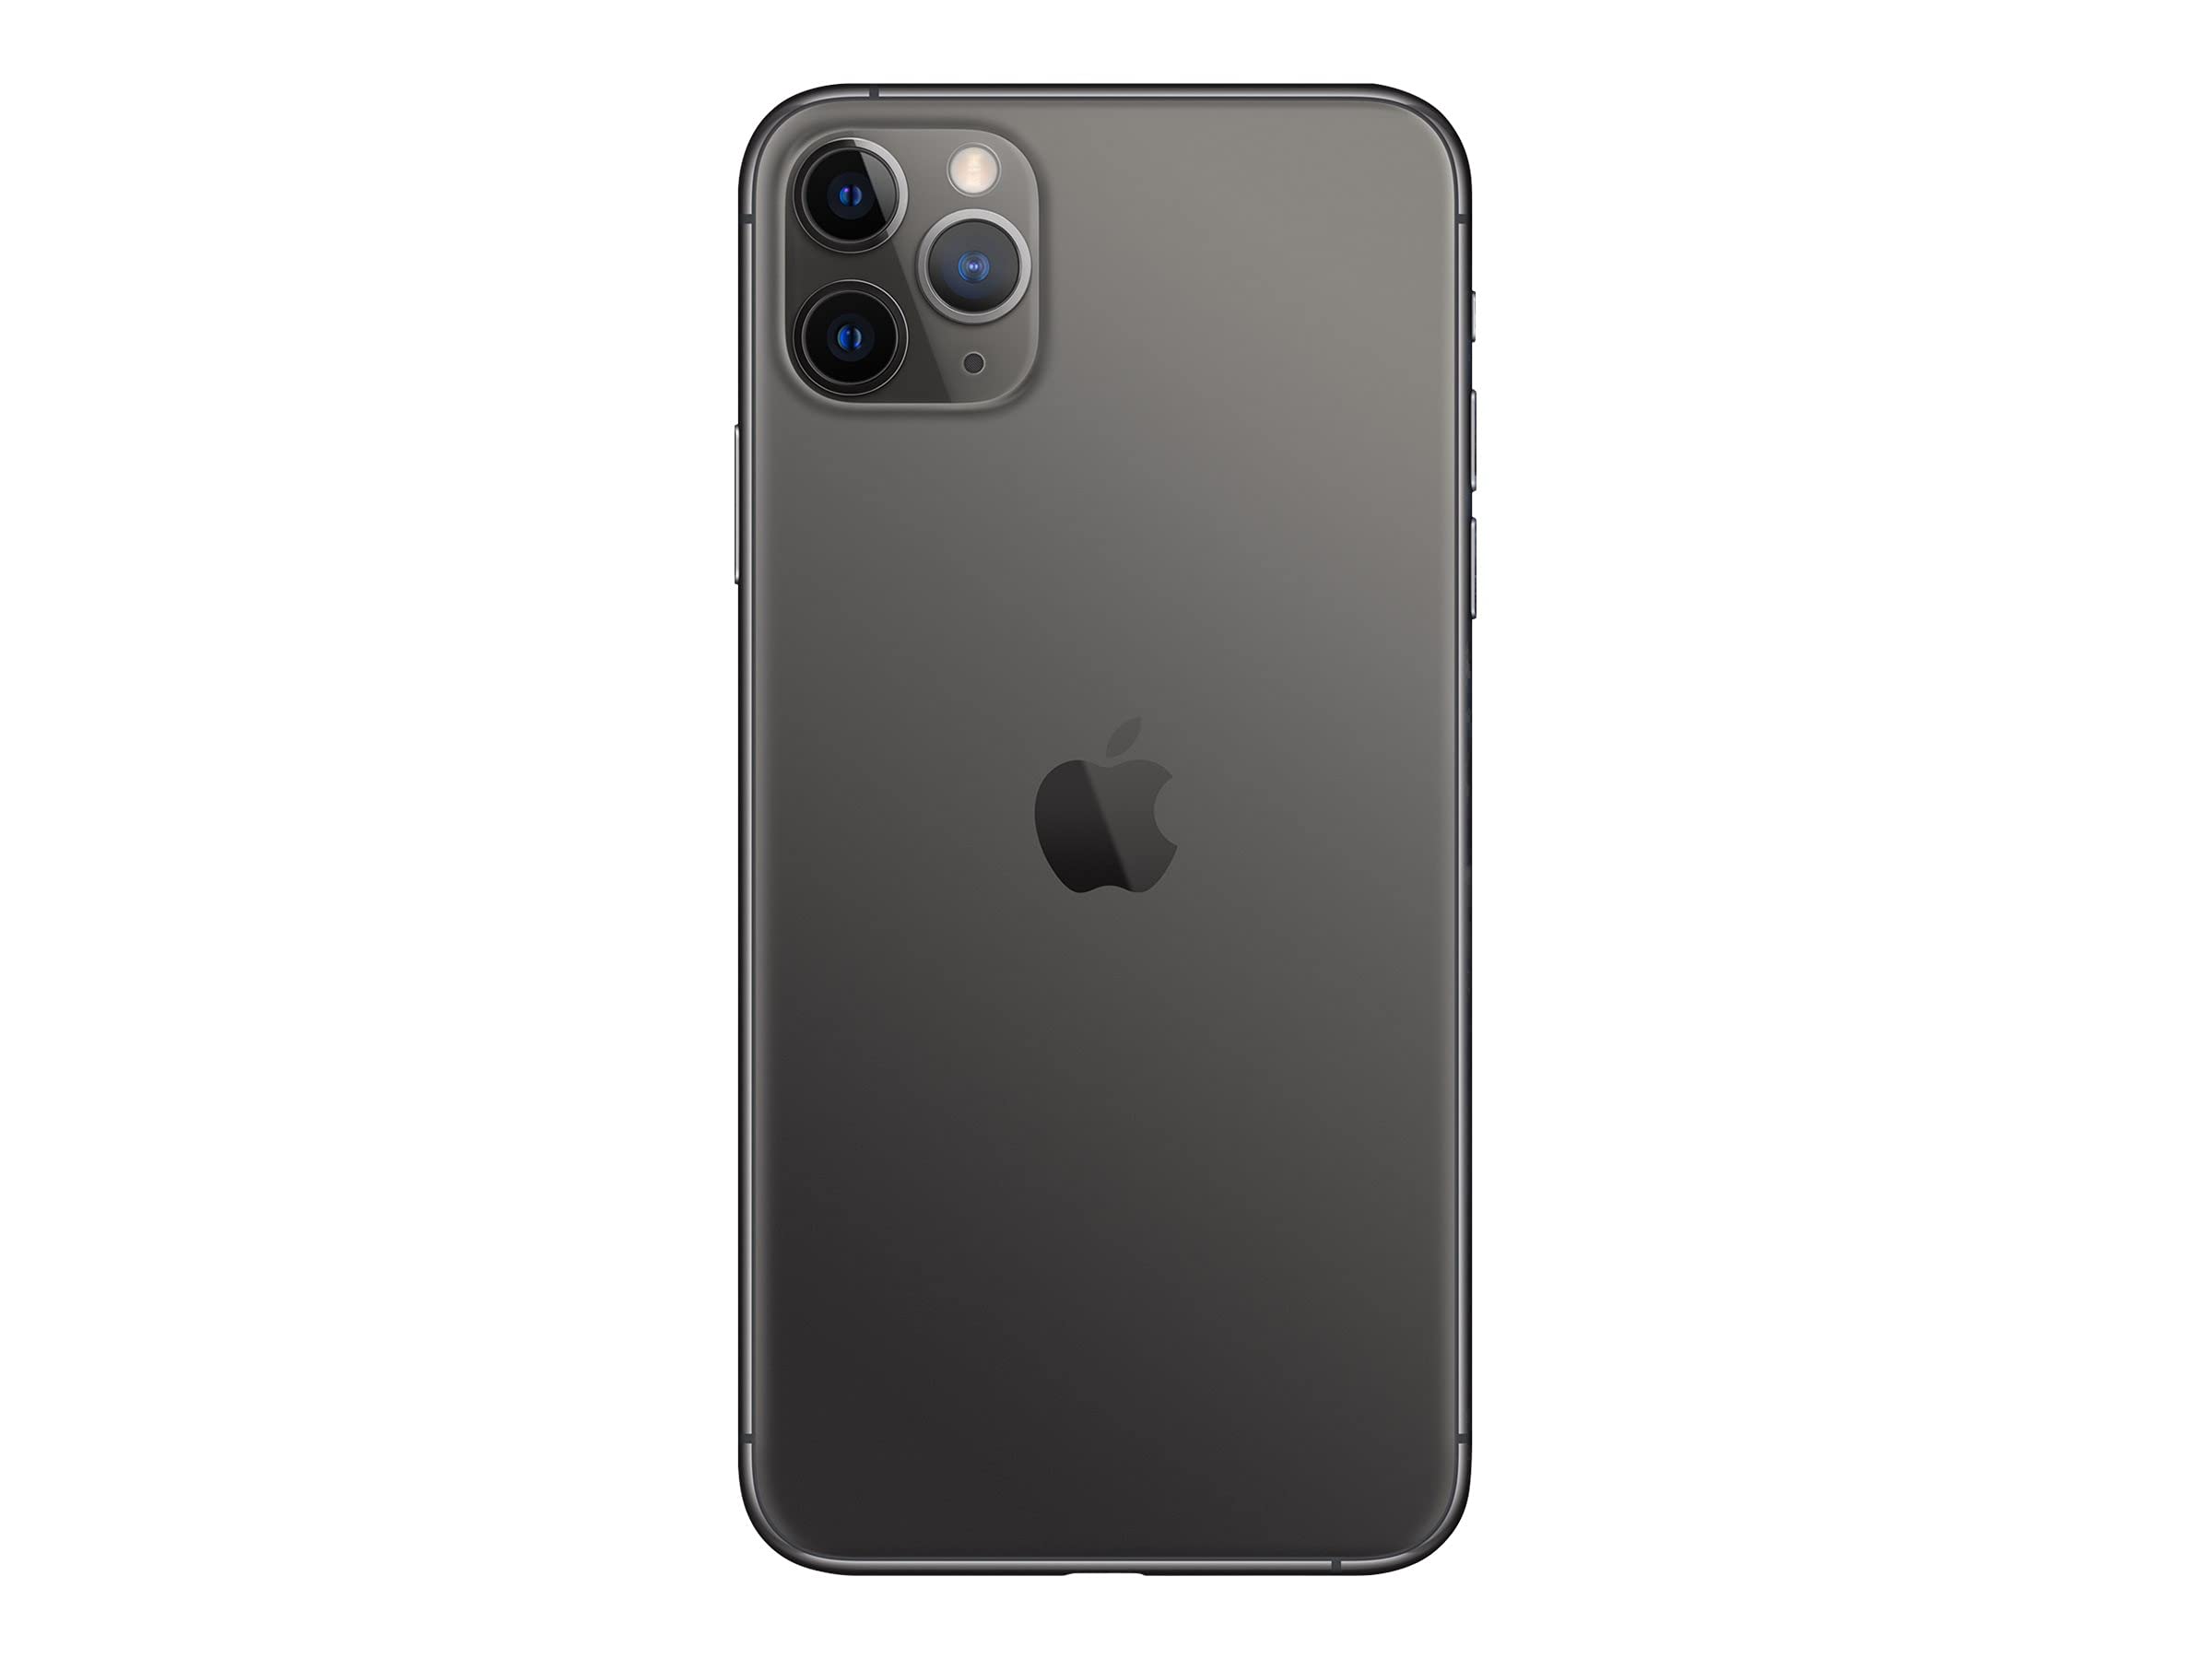 Apple iPhone 11 Pro Max, 256GB, Space Gray - Unlocked (Renewed Premium)